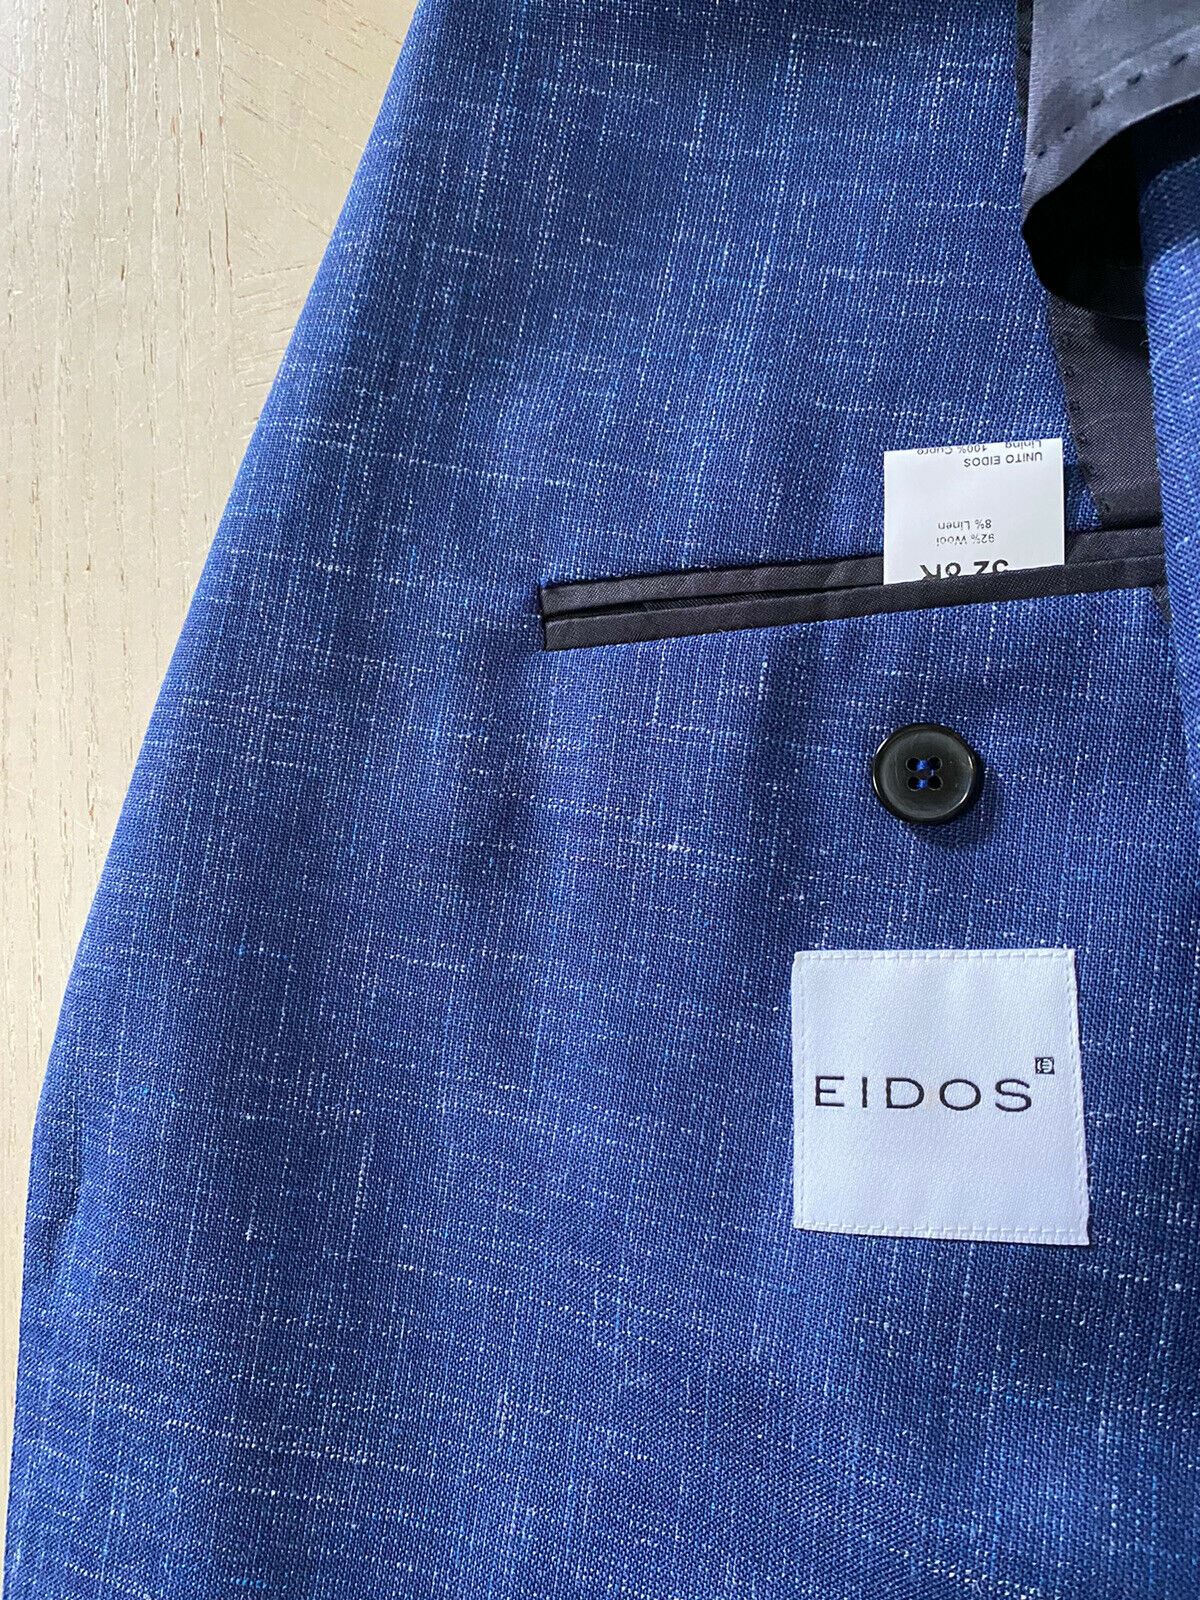 NWT $1350 Eidos Men’s Jacket Blazer Bright Blue 42 US ( 52 Eu ) Italy